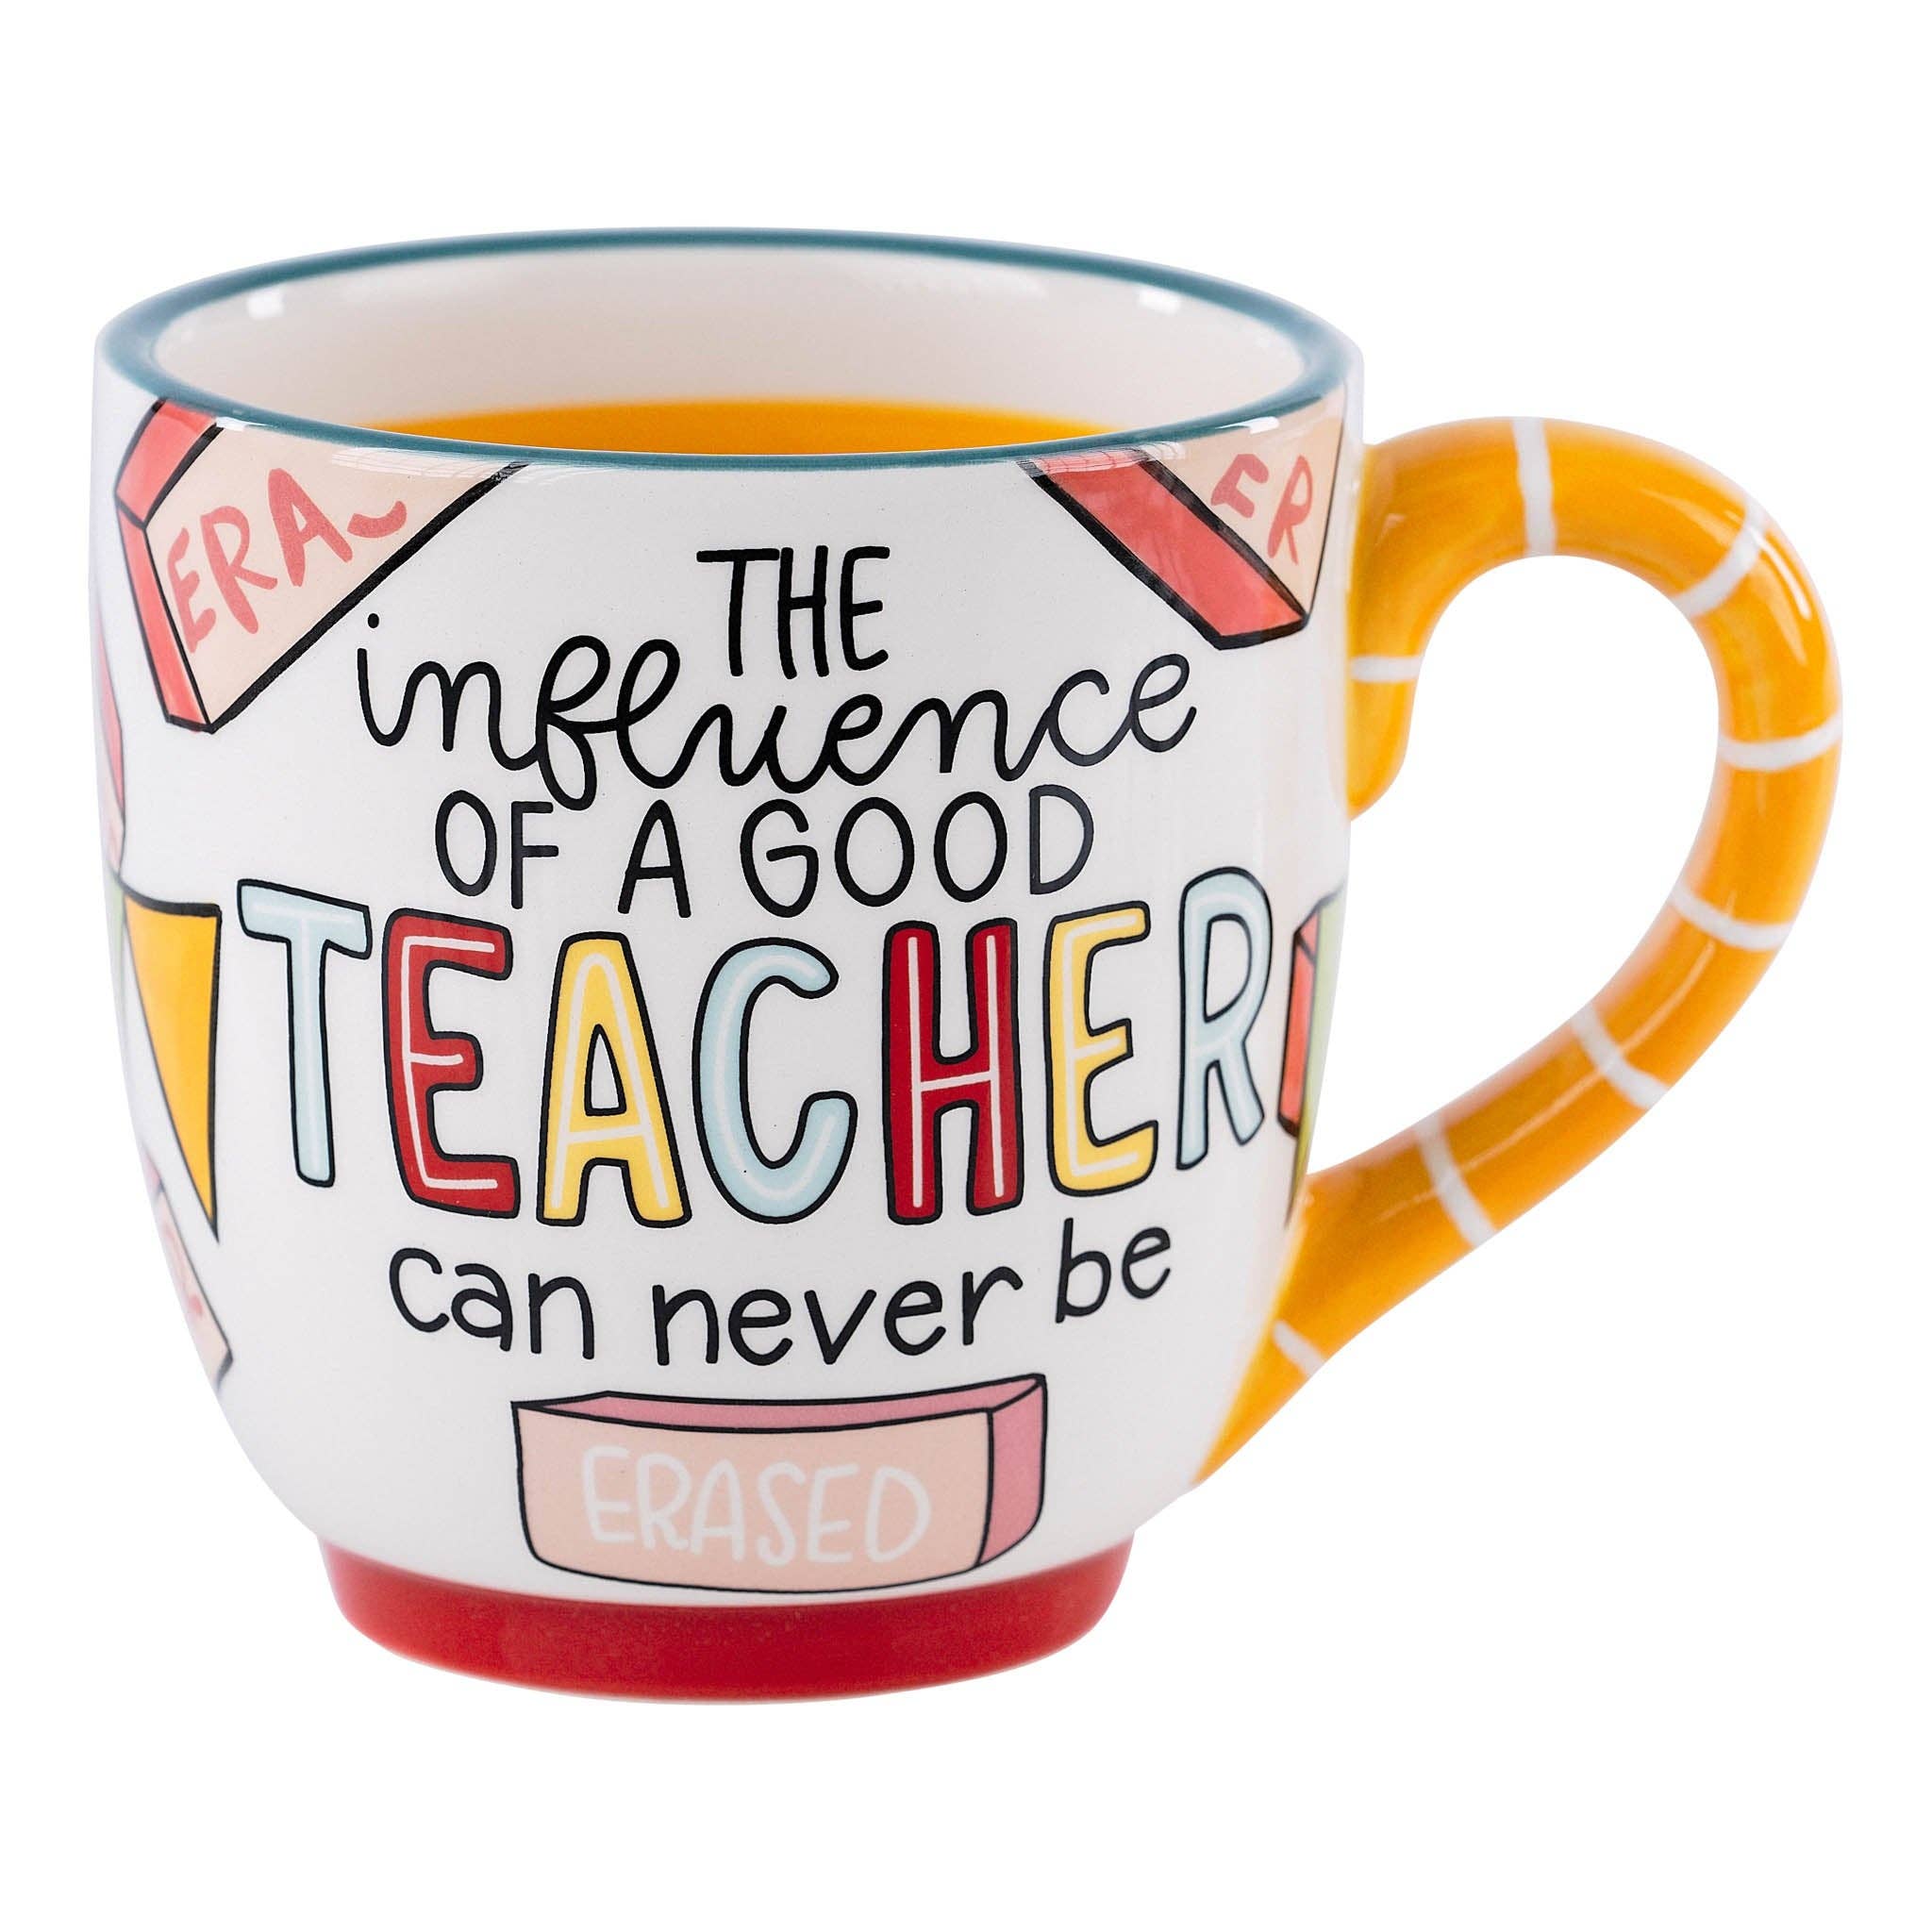 Teacher Fuel Mug End OF Term Teacher Gift Teachers Coffee Mug